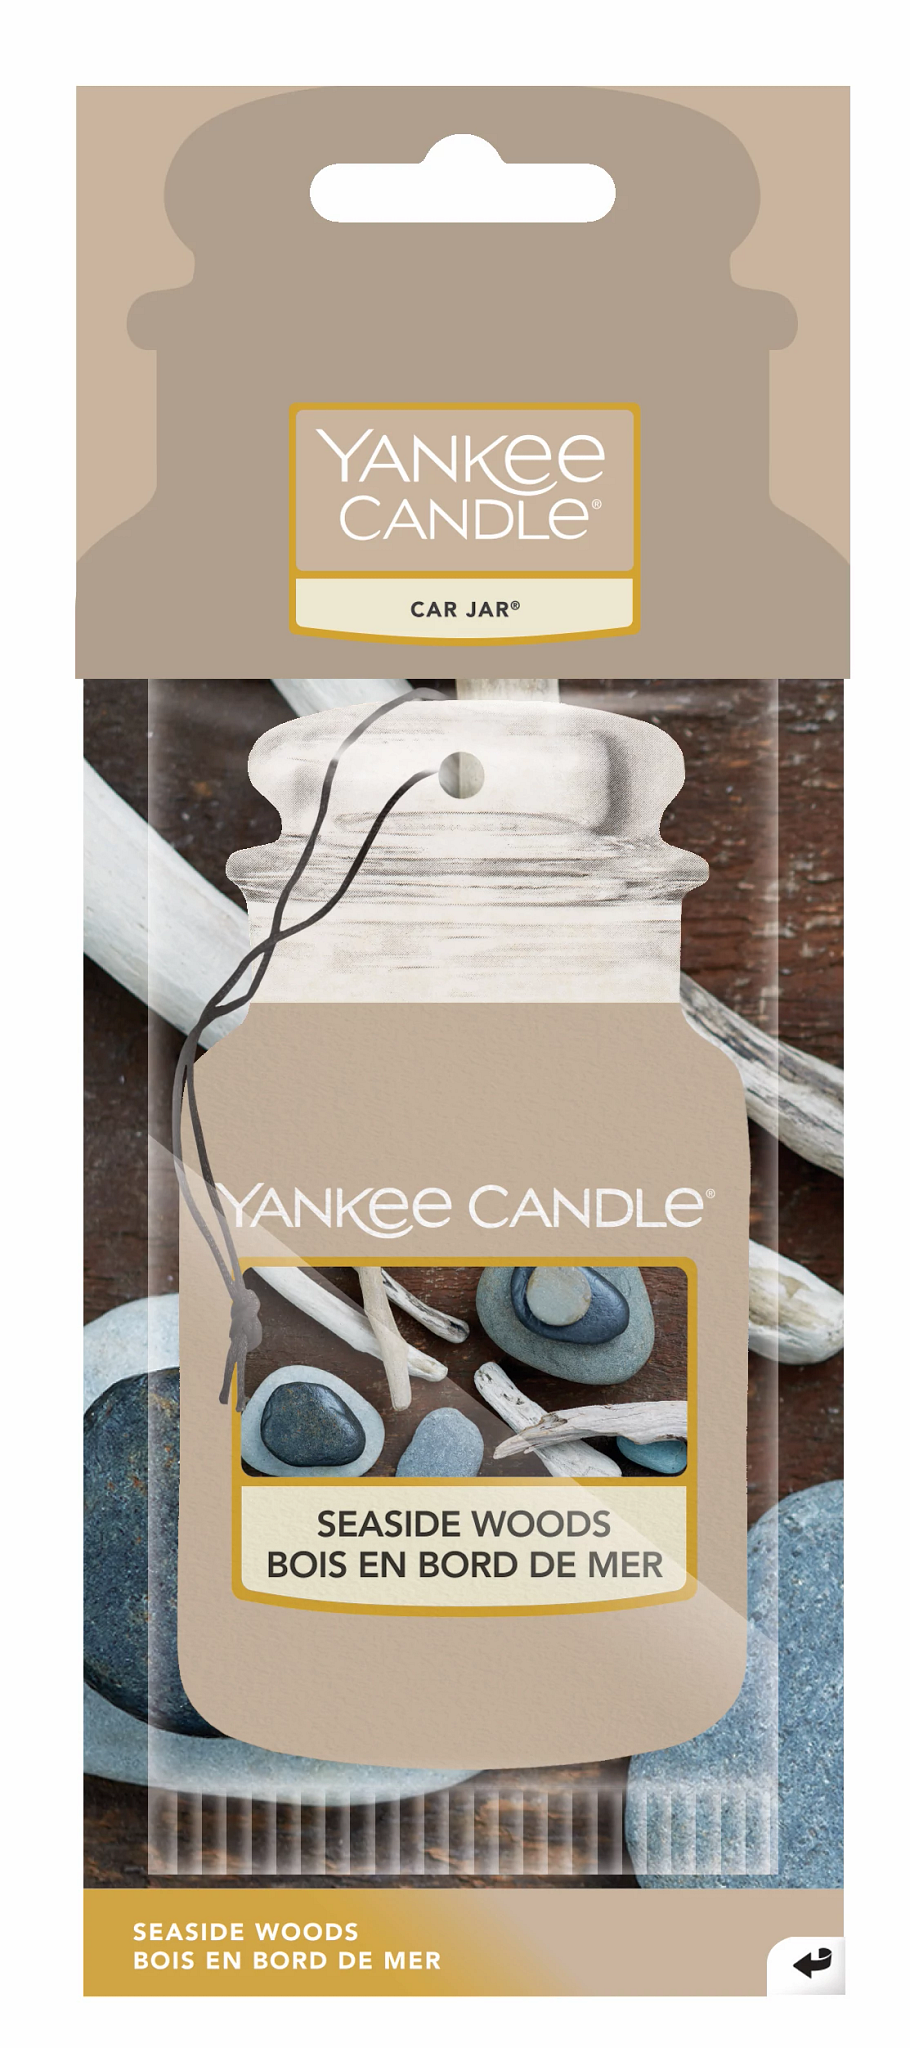 Yankee Candle - Car Jar Seaside Woods